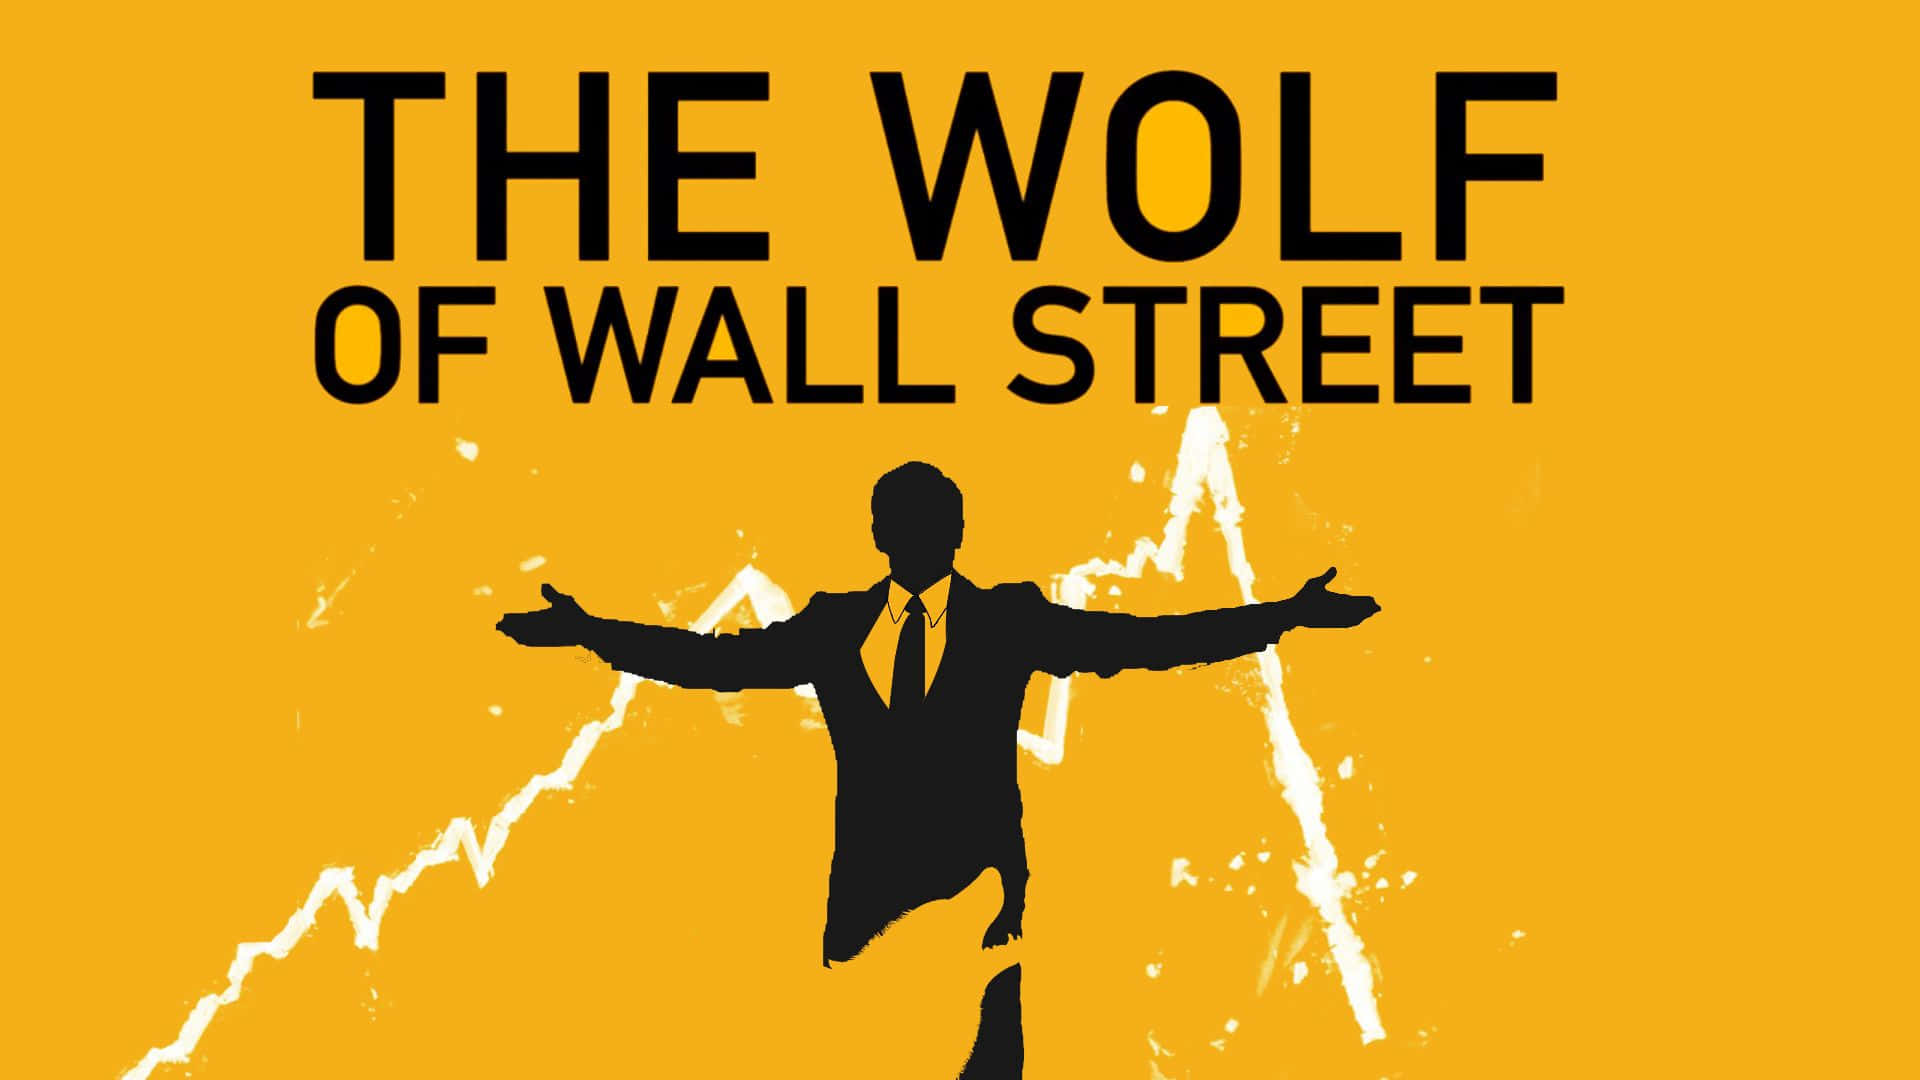 Image Leonardo Dicaprio In Character As Jordan Belfort In The Wolf Of Wall Street